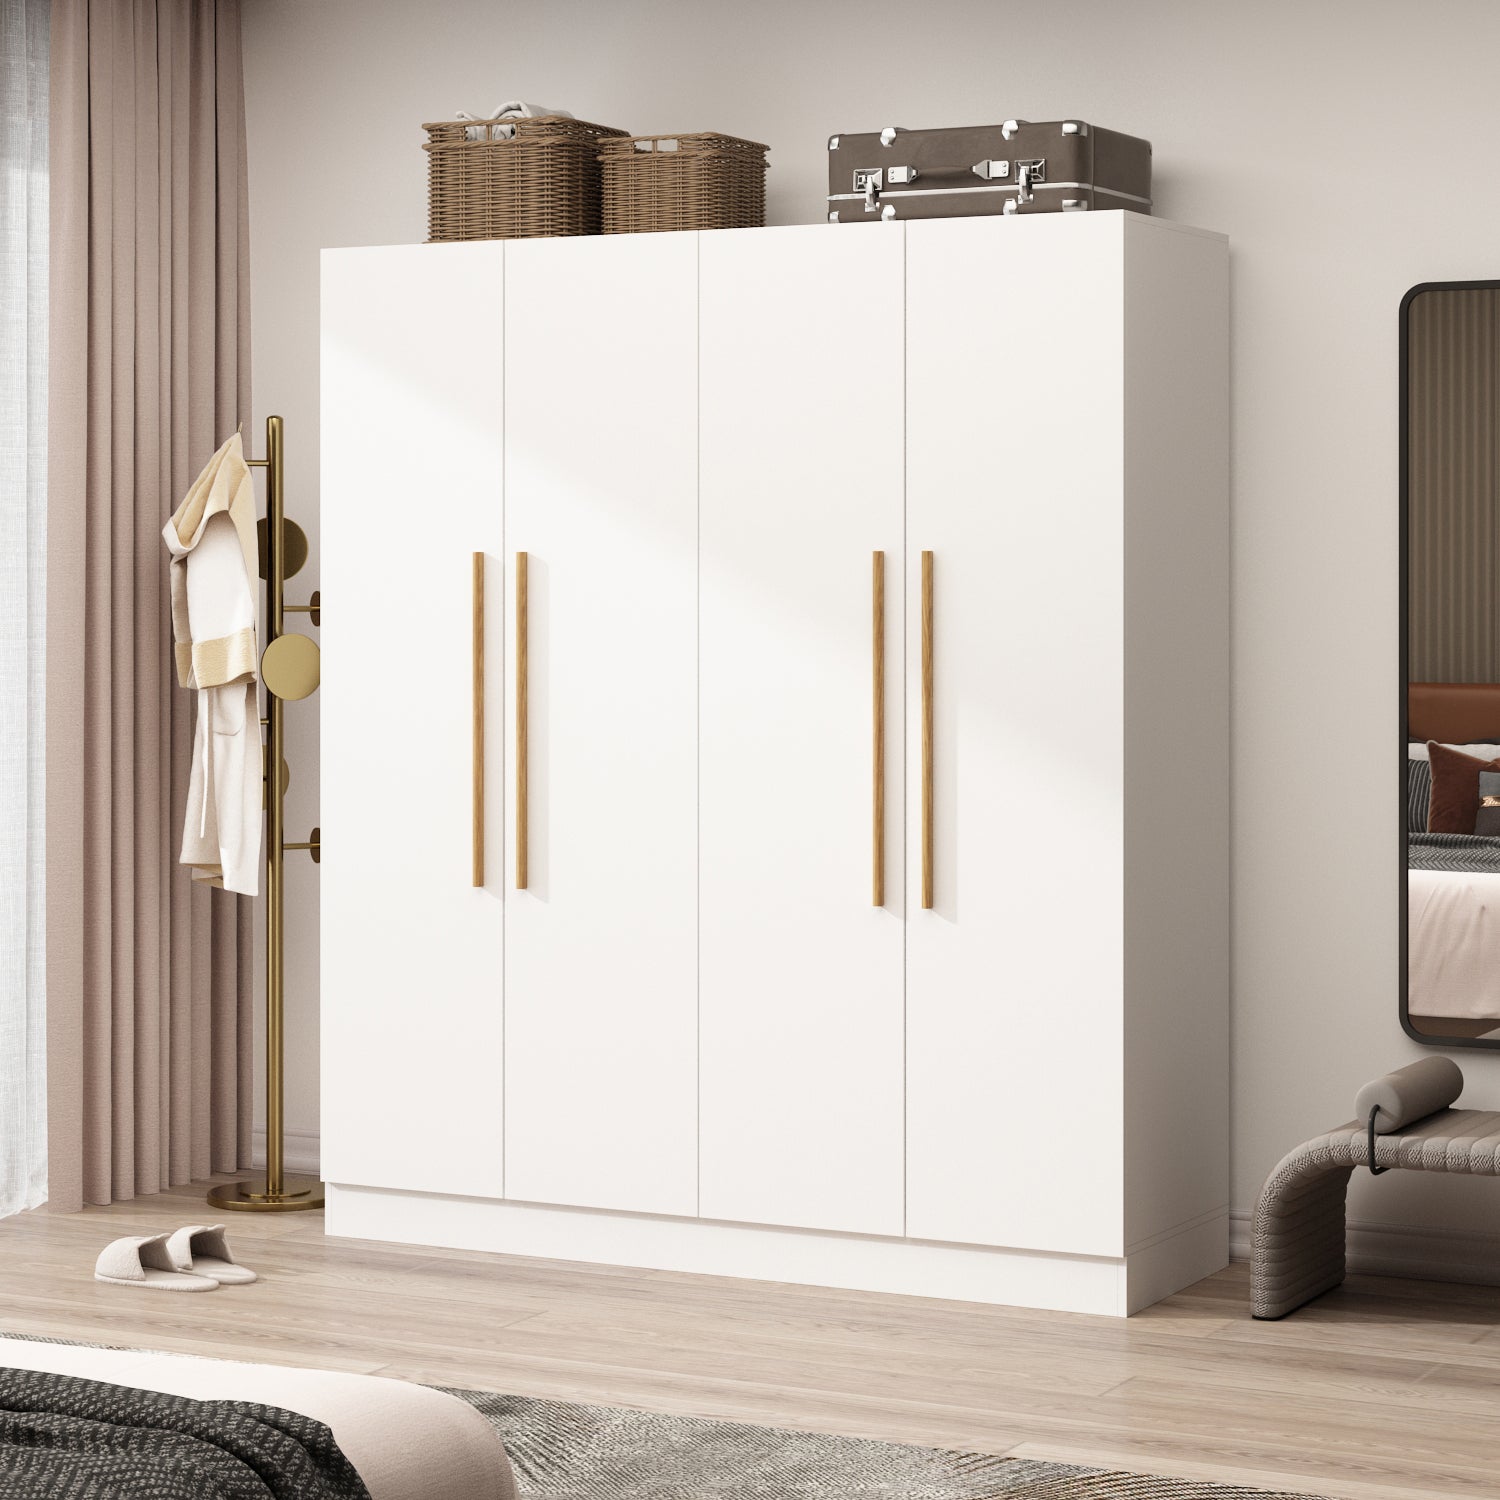 Armoire Solid Wood Clothes Organizer Storage Cabinet 4-Door Wardrobe Family Closet